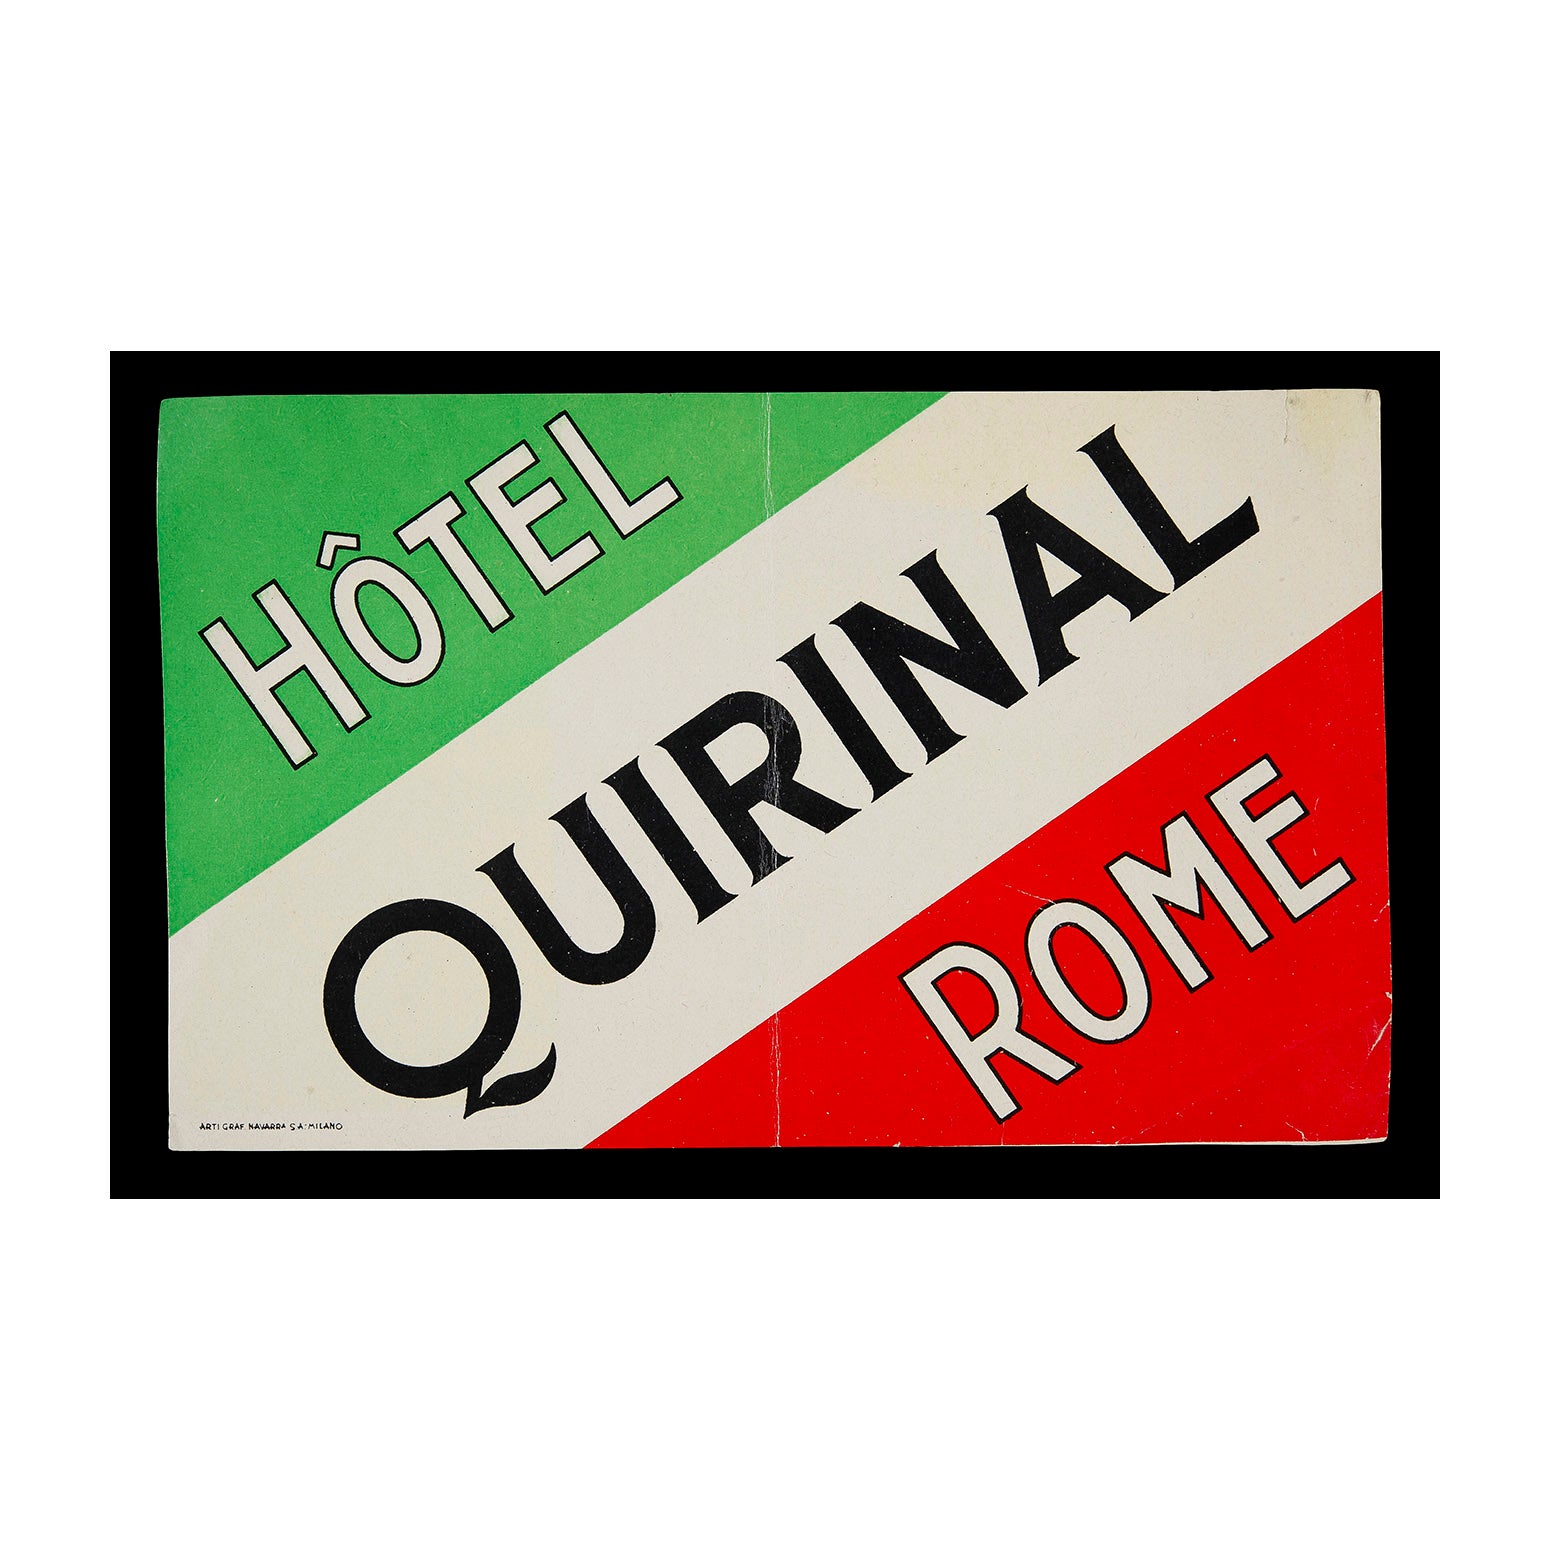 Hotel Quirinal, Rome (luggage label)